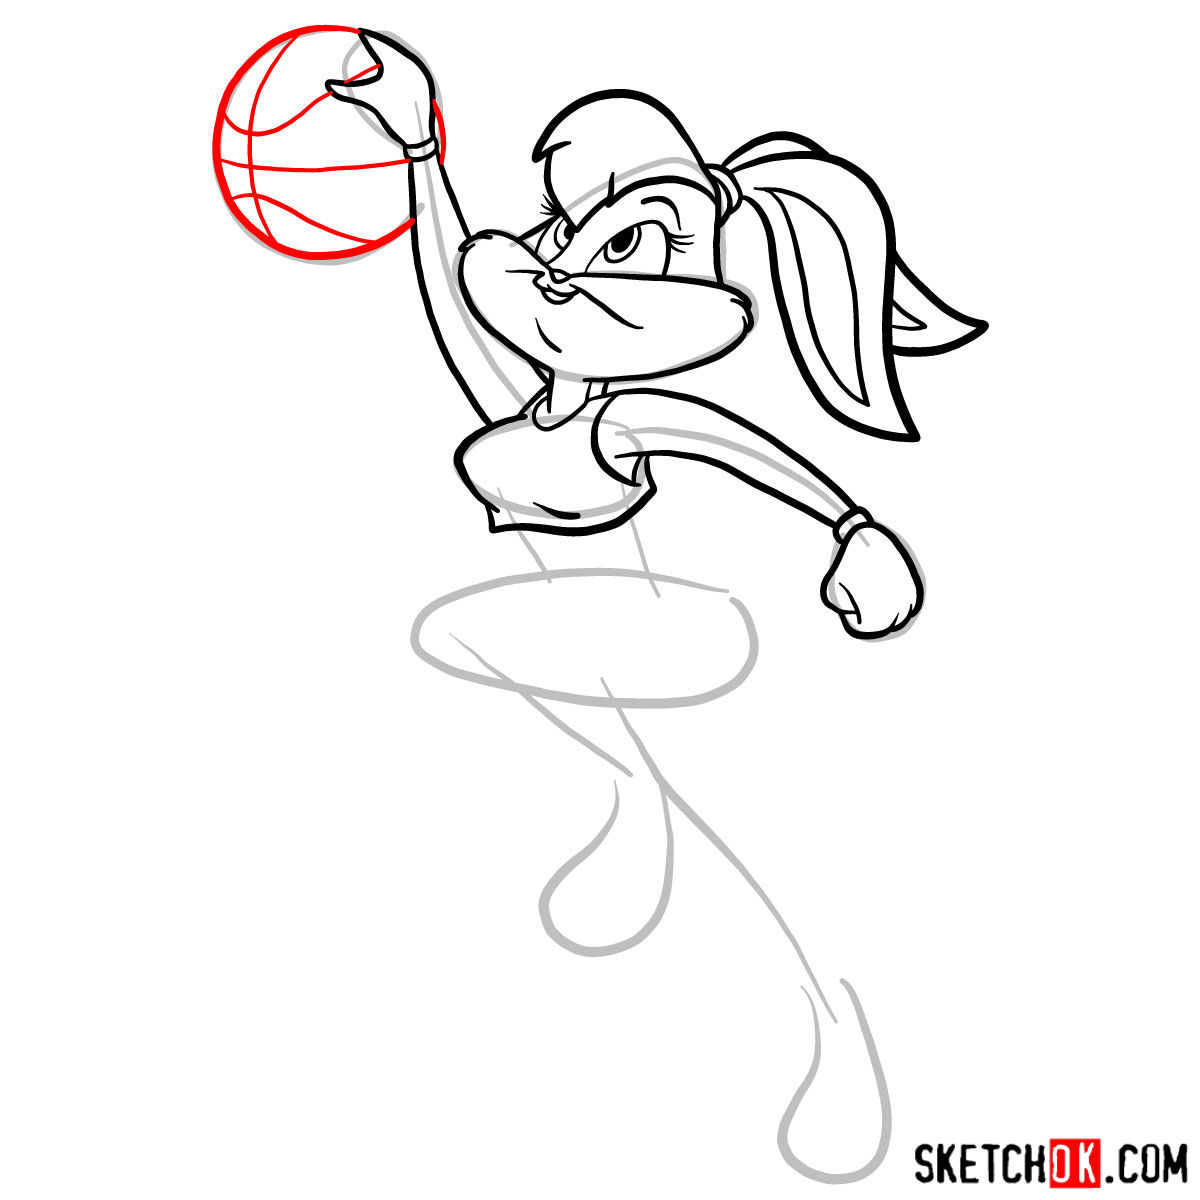 How to draw Lola Bunny playing basketball - step 08